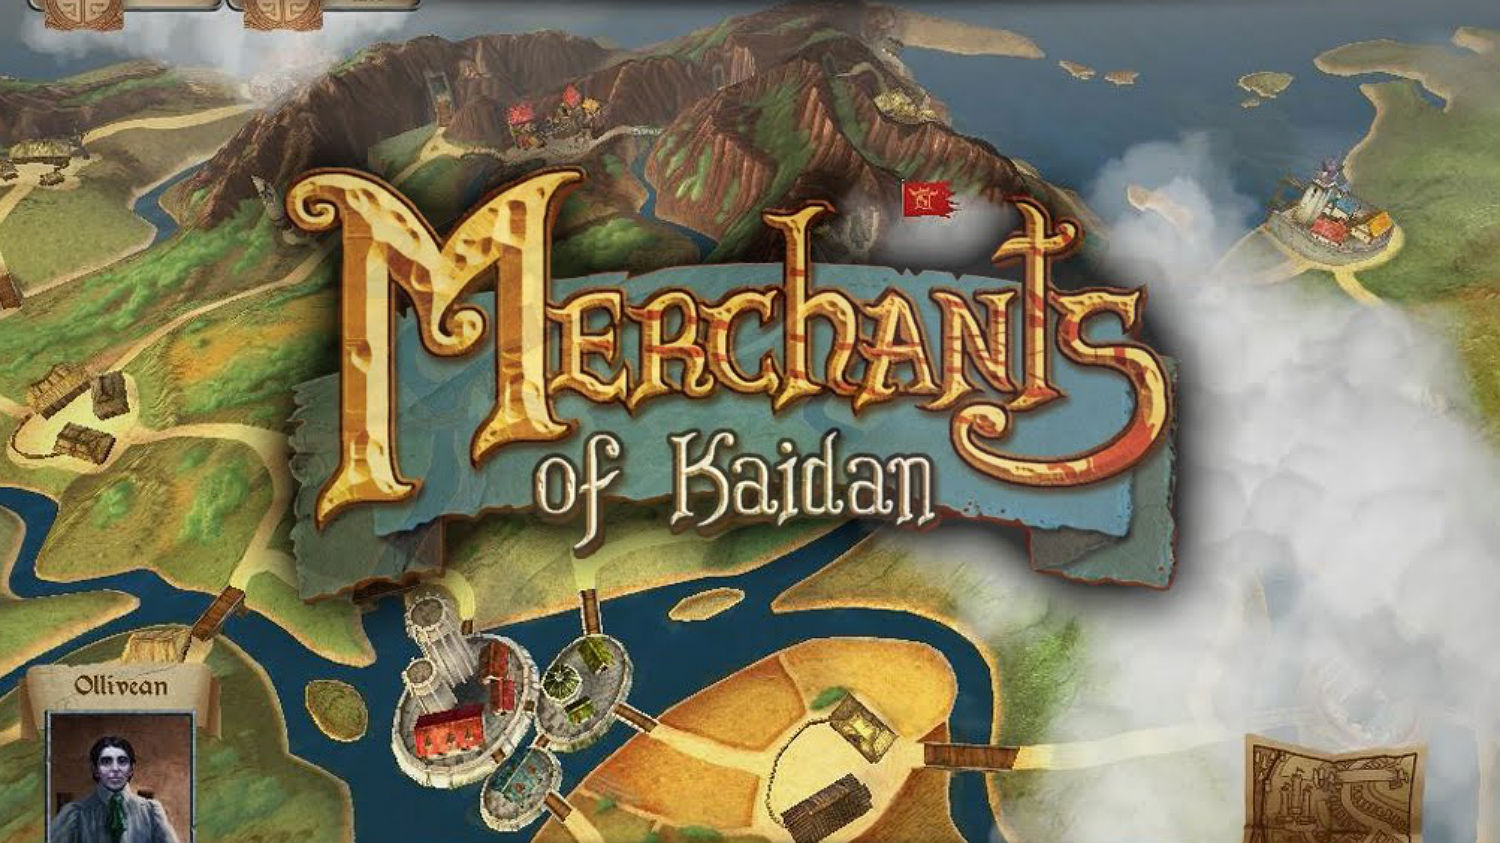 Merchants of Kaidan: A Good Trade Off